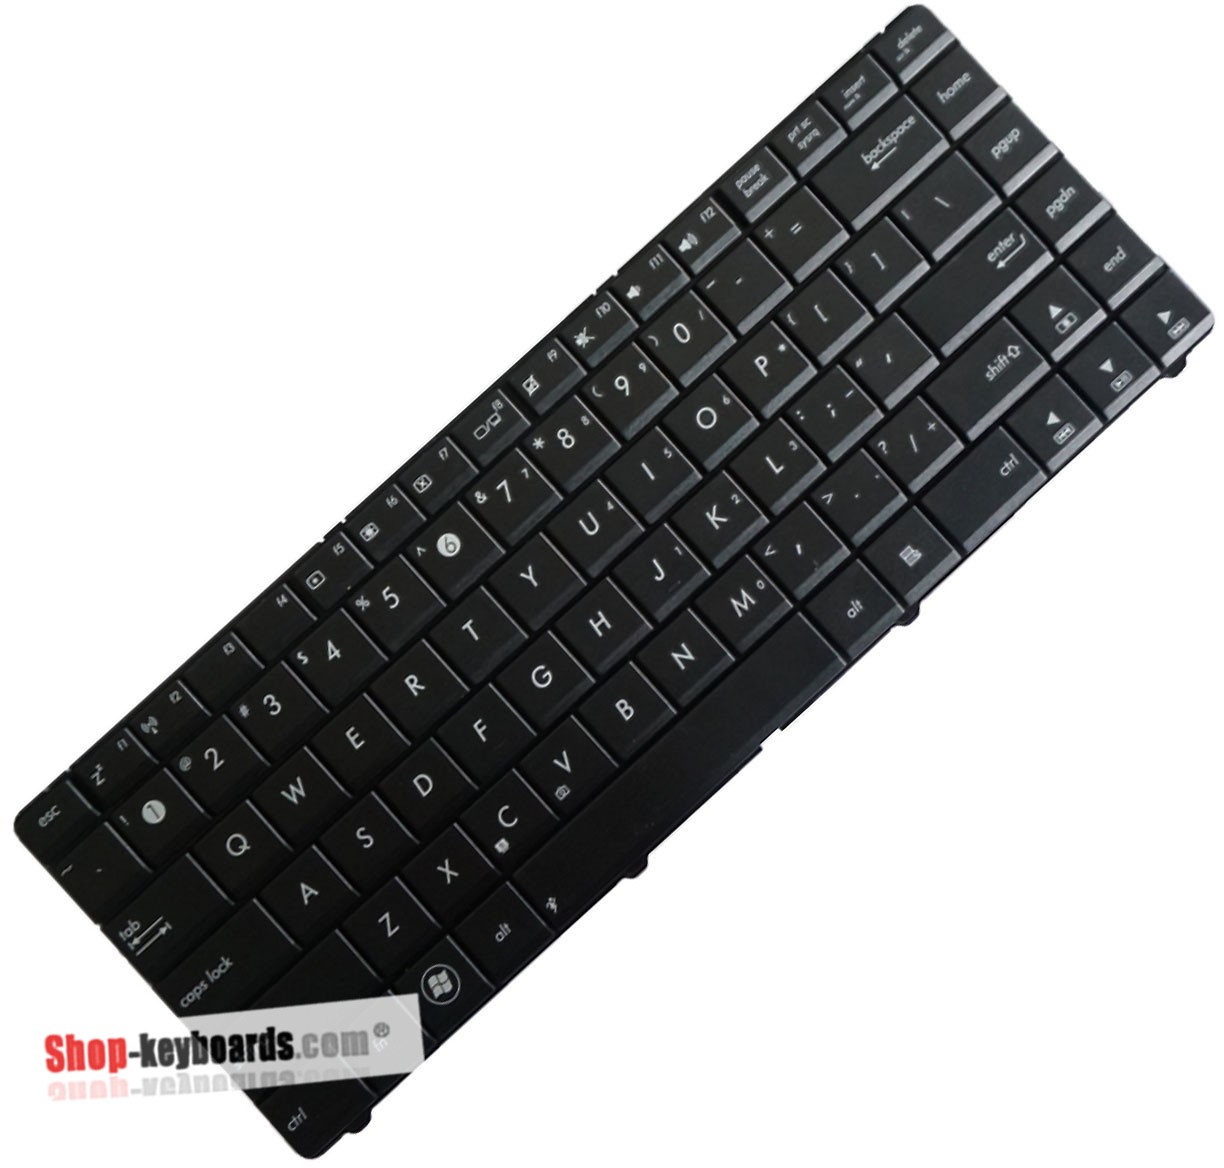 Asus K43T Keyboard replacement